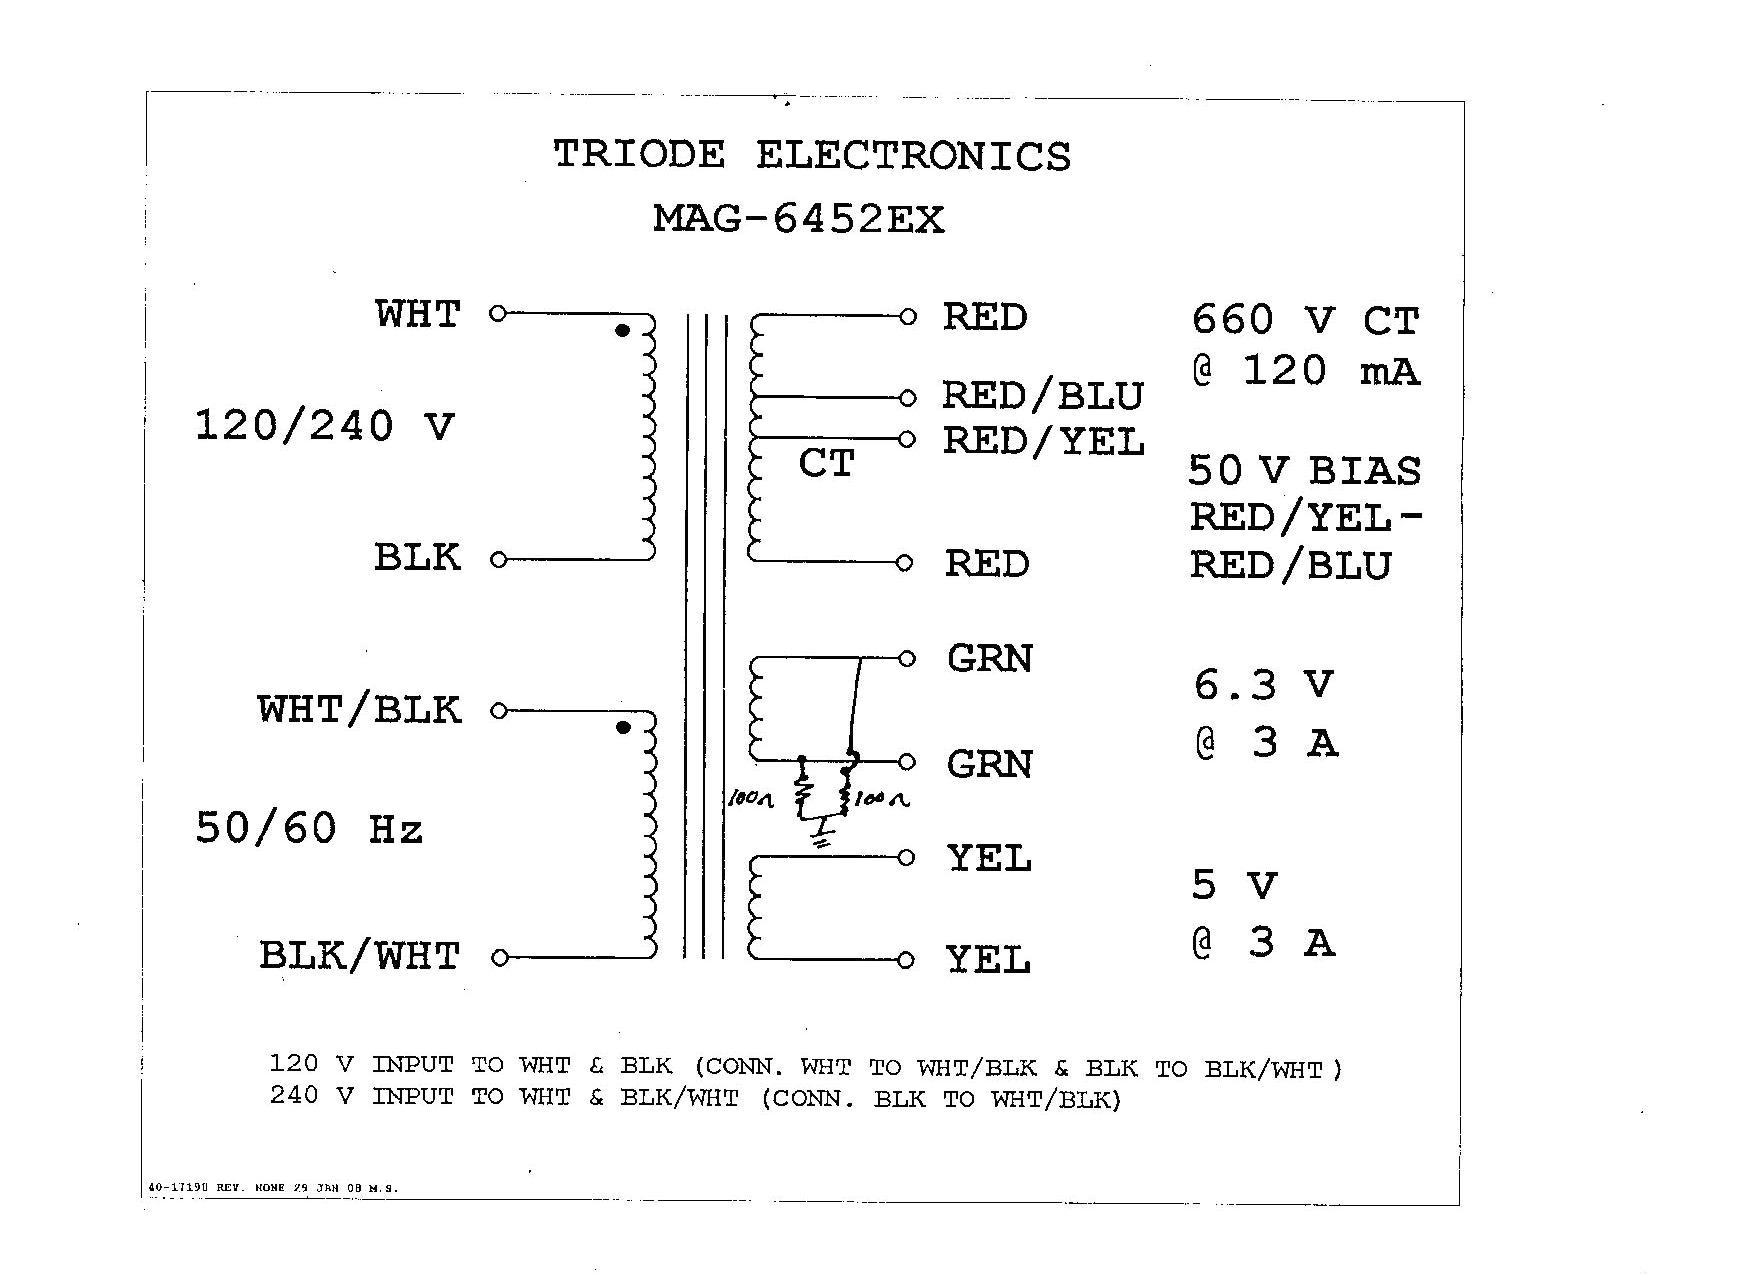 control transformer wiring diagram wiring diagram today wiring diagrams in addition 480 single phase transformer wiring